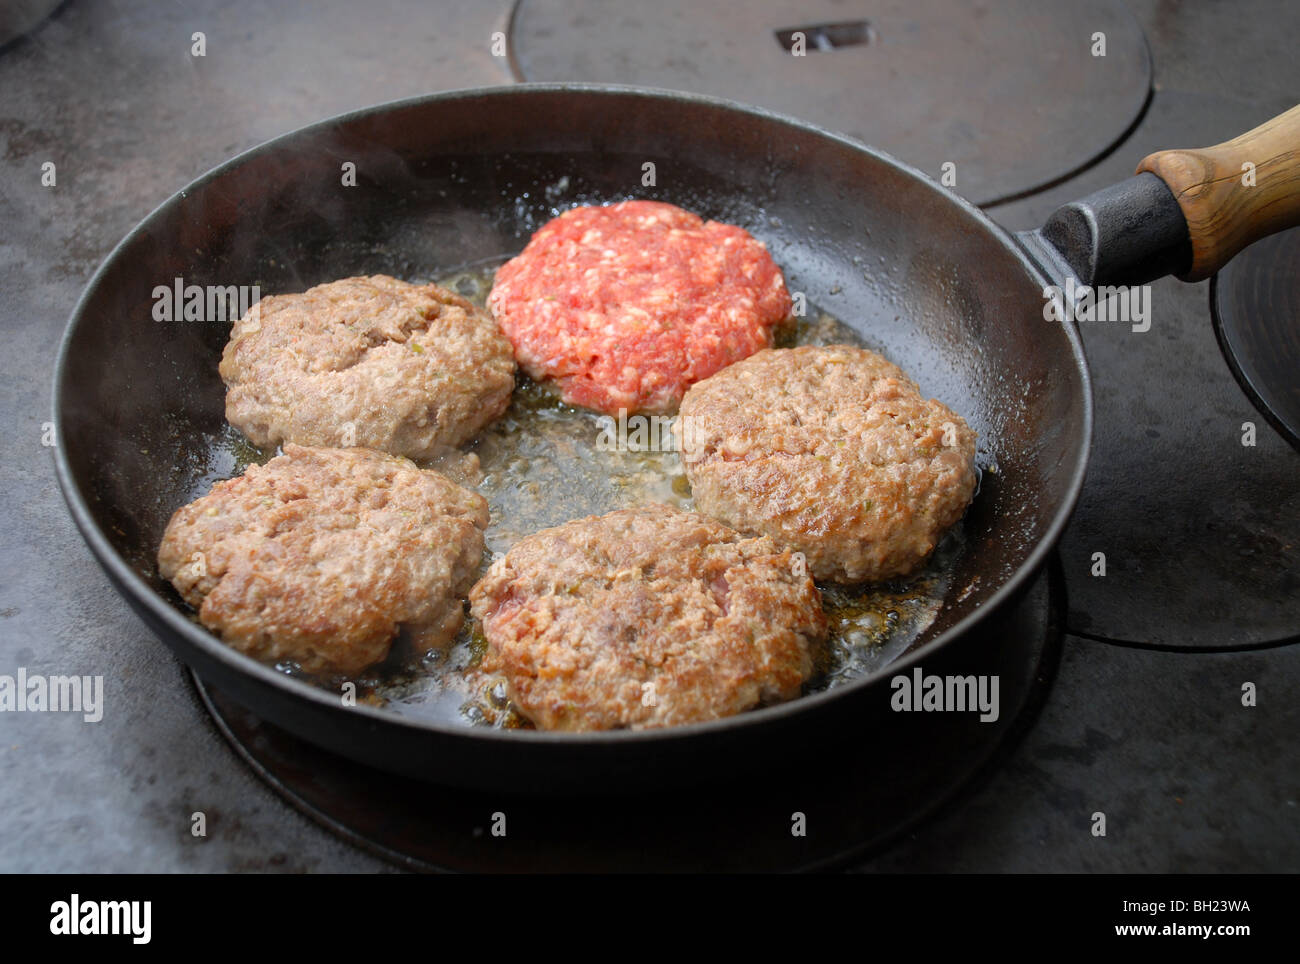 Frying hamburgers Stock Photo